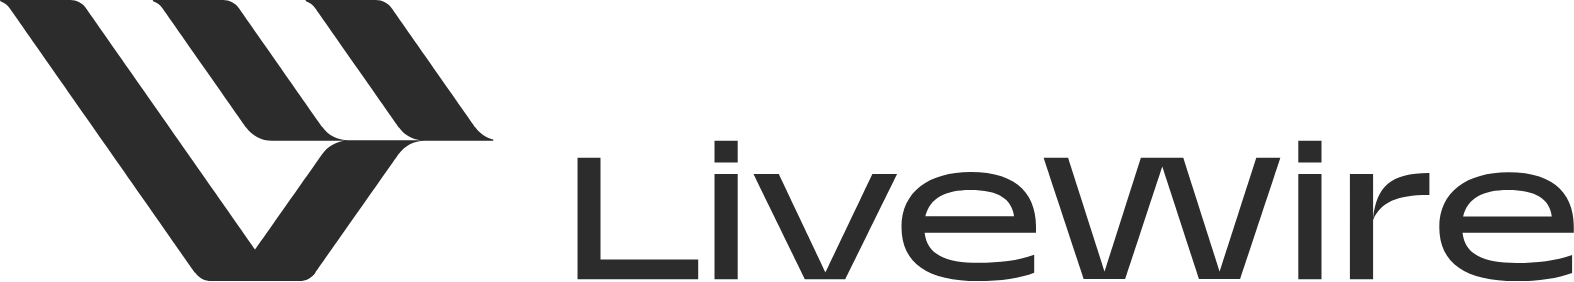 LiveWire Group logo large (transparent PNG)